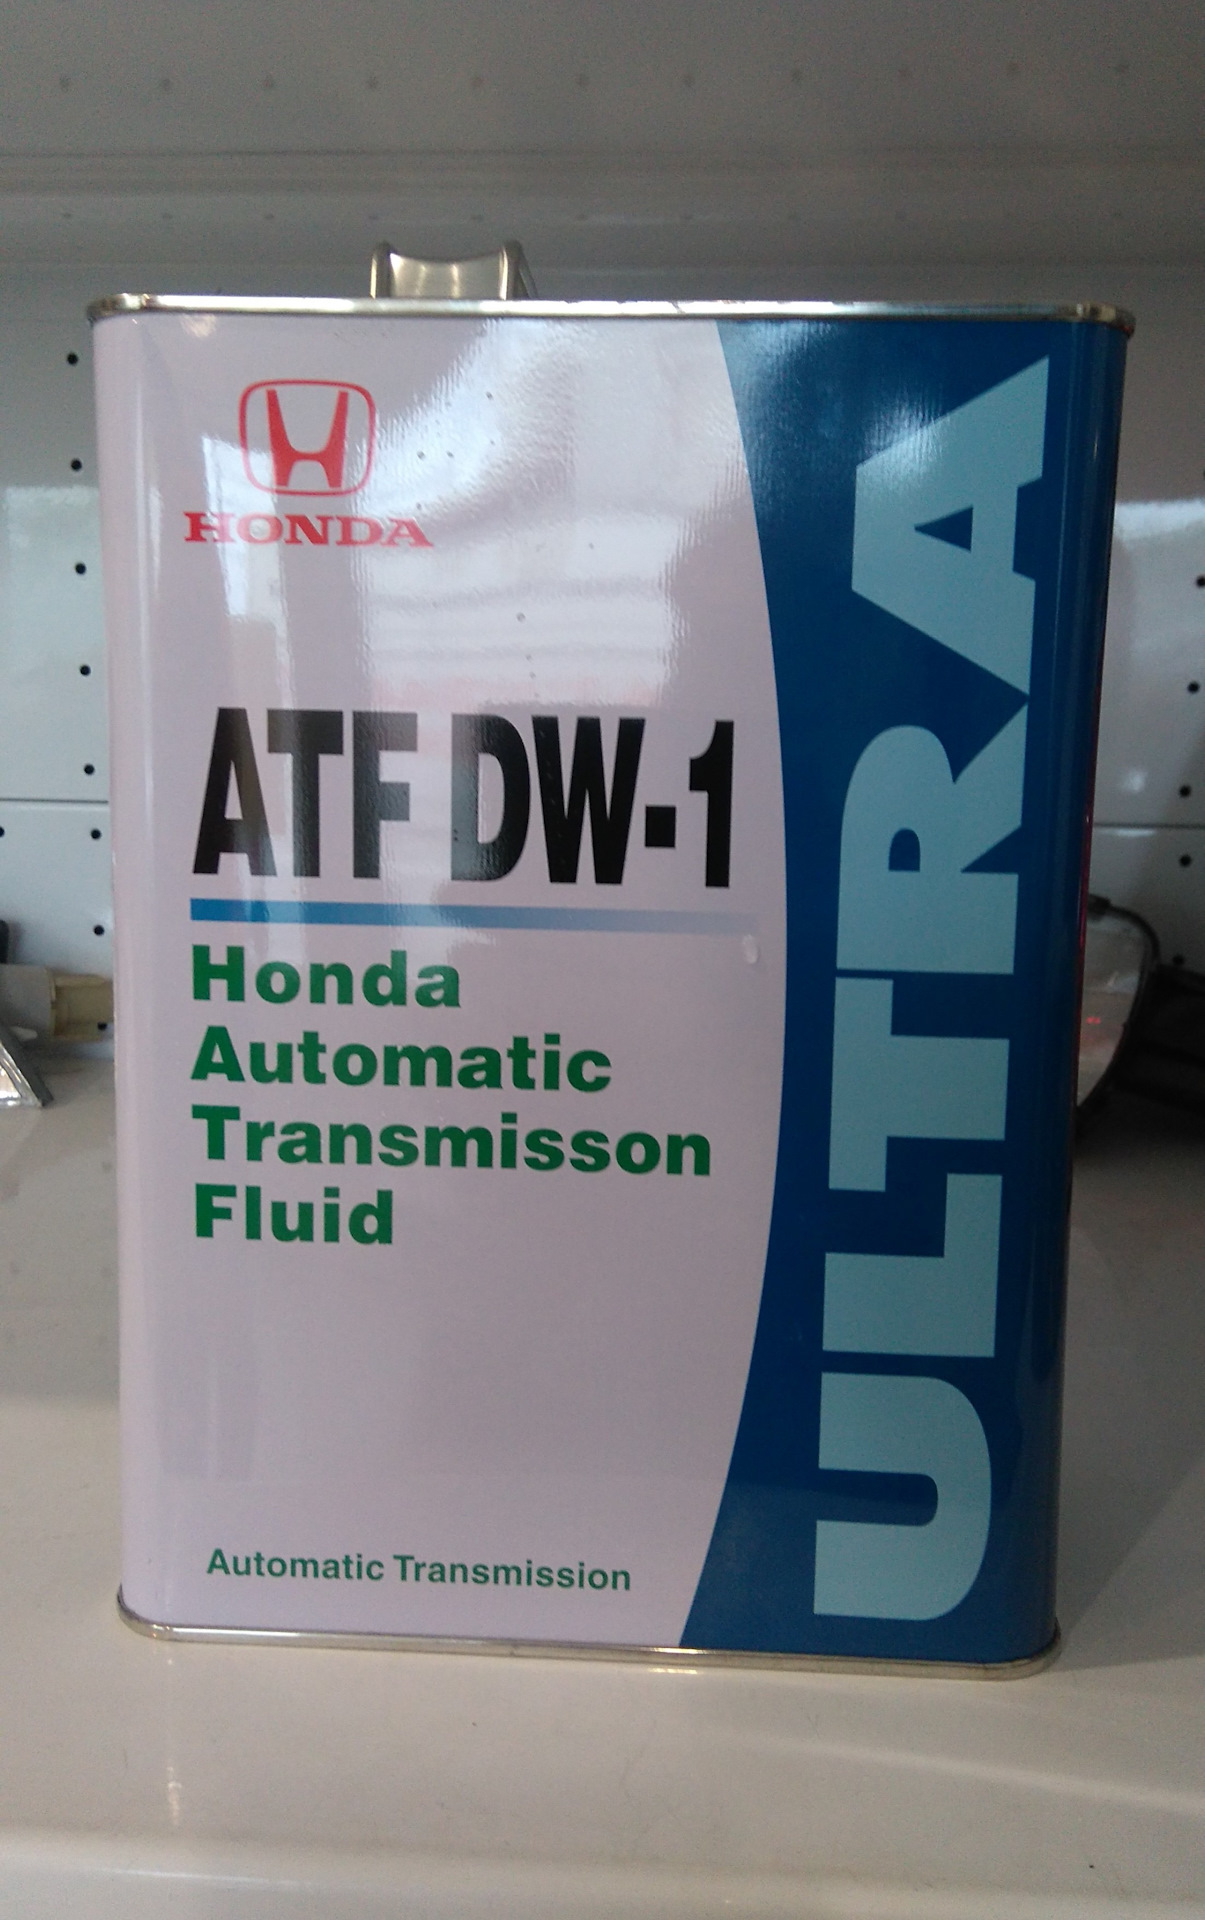 ATF dw1 Honda артикул. Honda 0826699904. Масло Хонда dw1 артикул. ATF dw1.